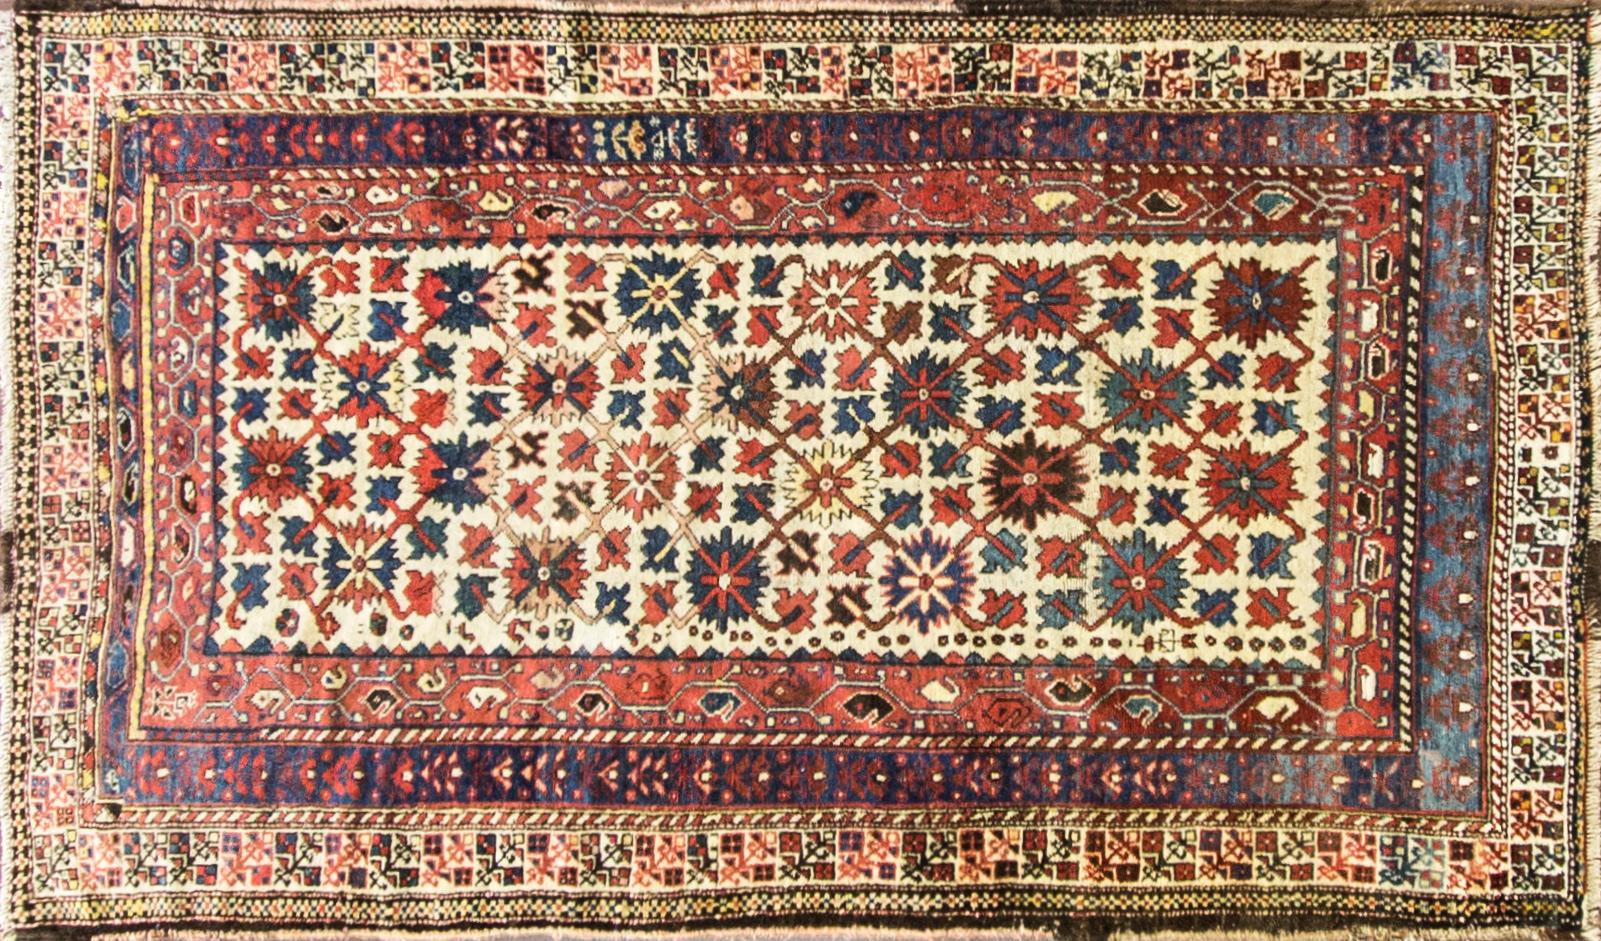 Fine antique Persian Bakhtiari rug, circa 1890 in good condition. Measures: 4' x 7'3